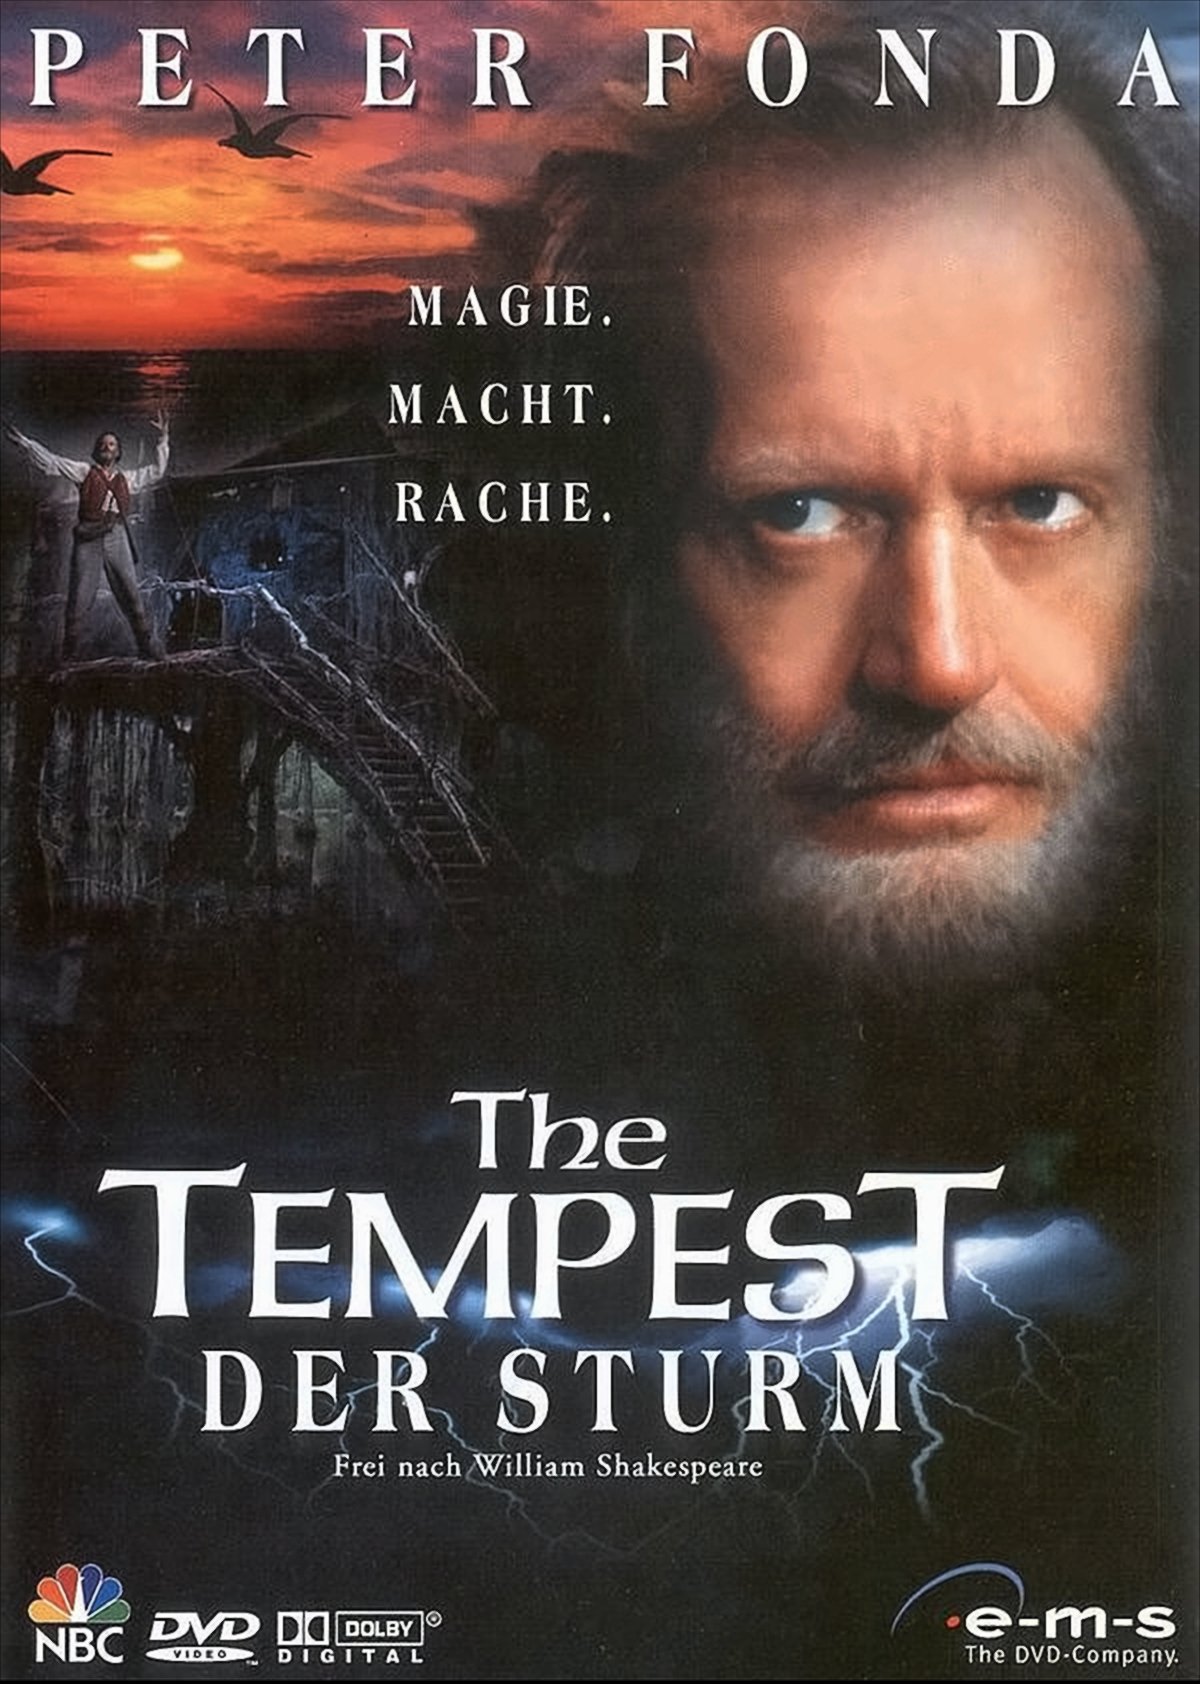 Tempest - Der Sturm von e-m-s GmbH